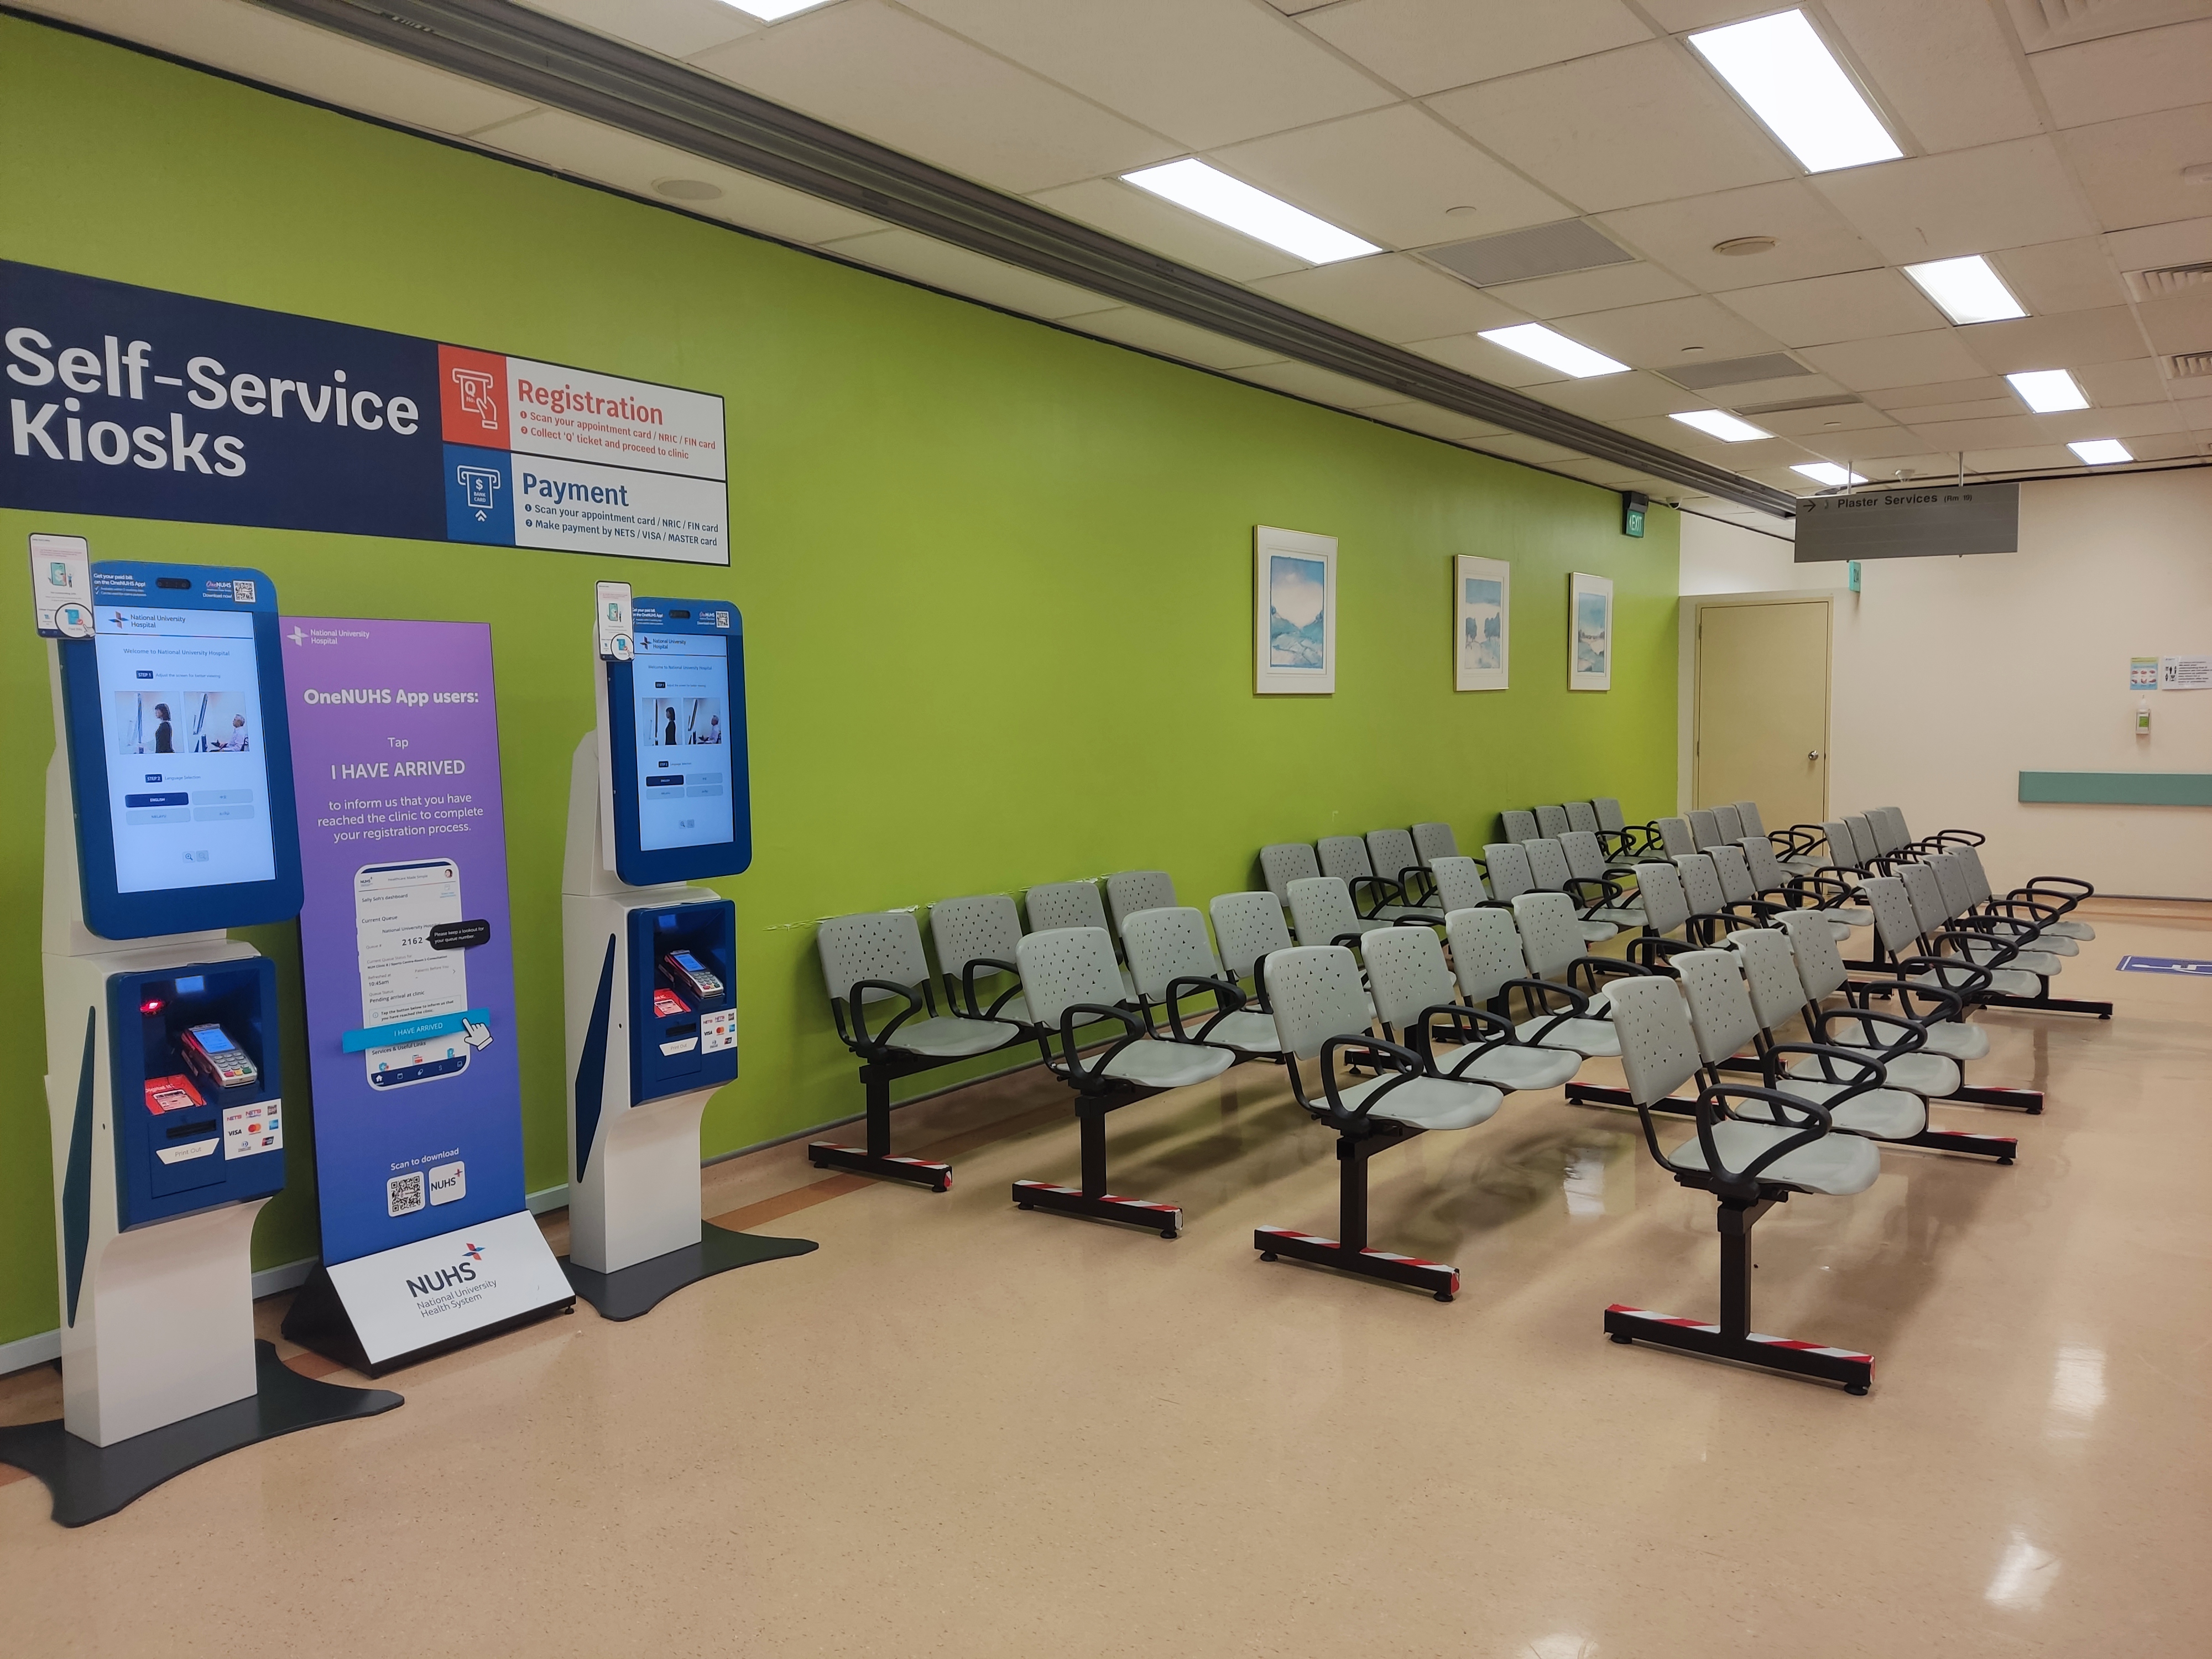 Self-service kiosks and waiting area